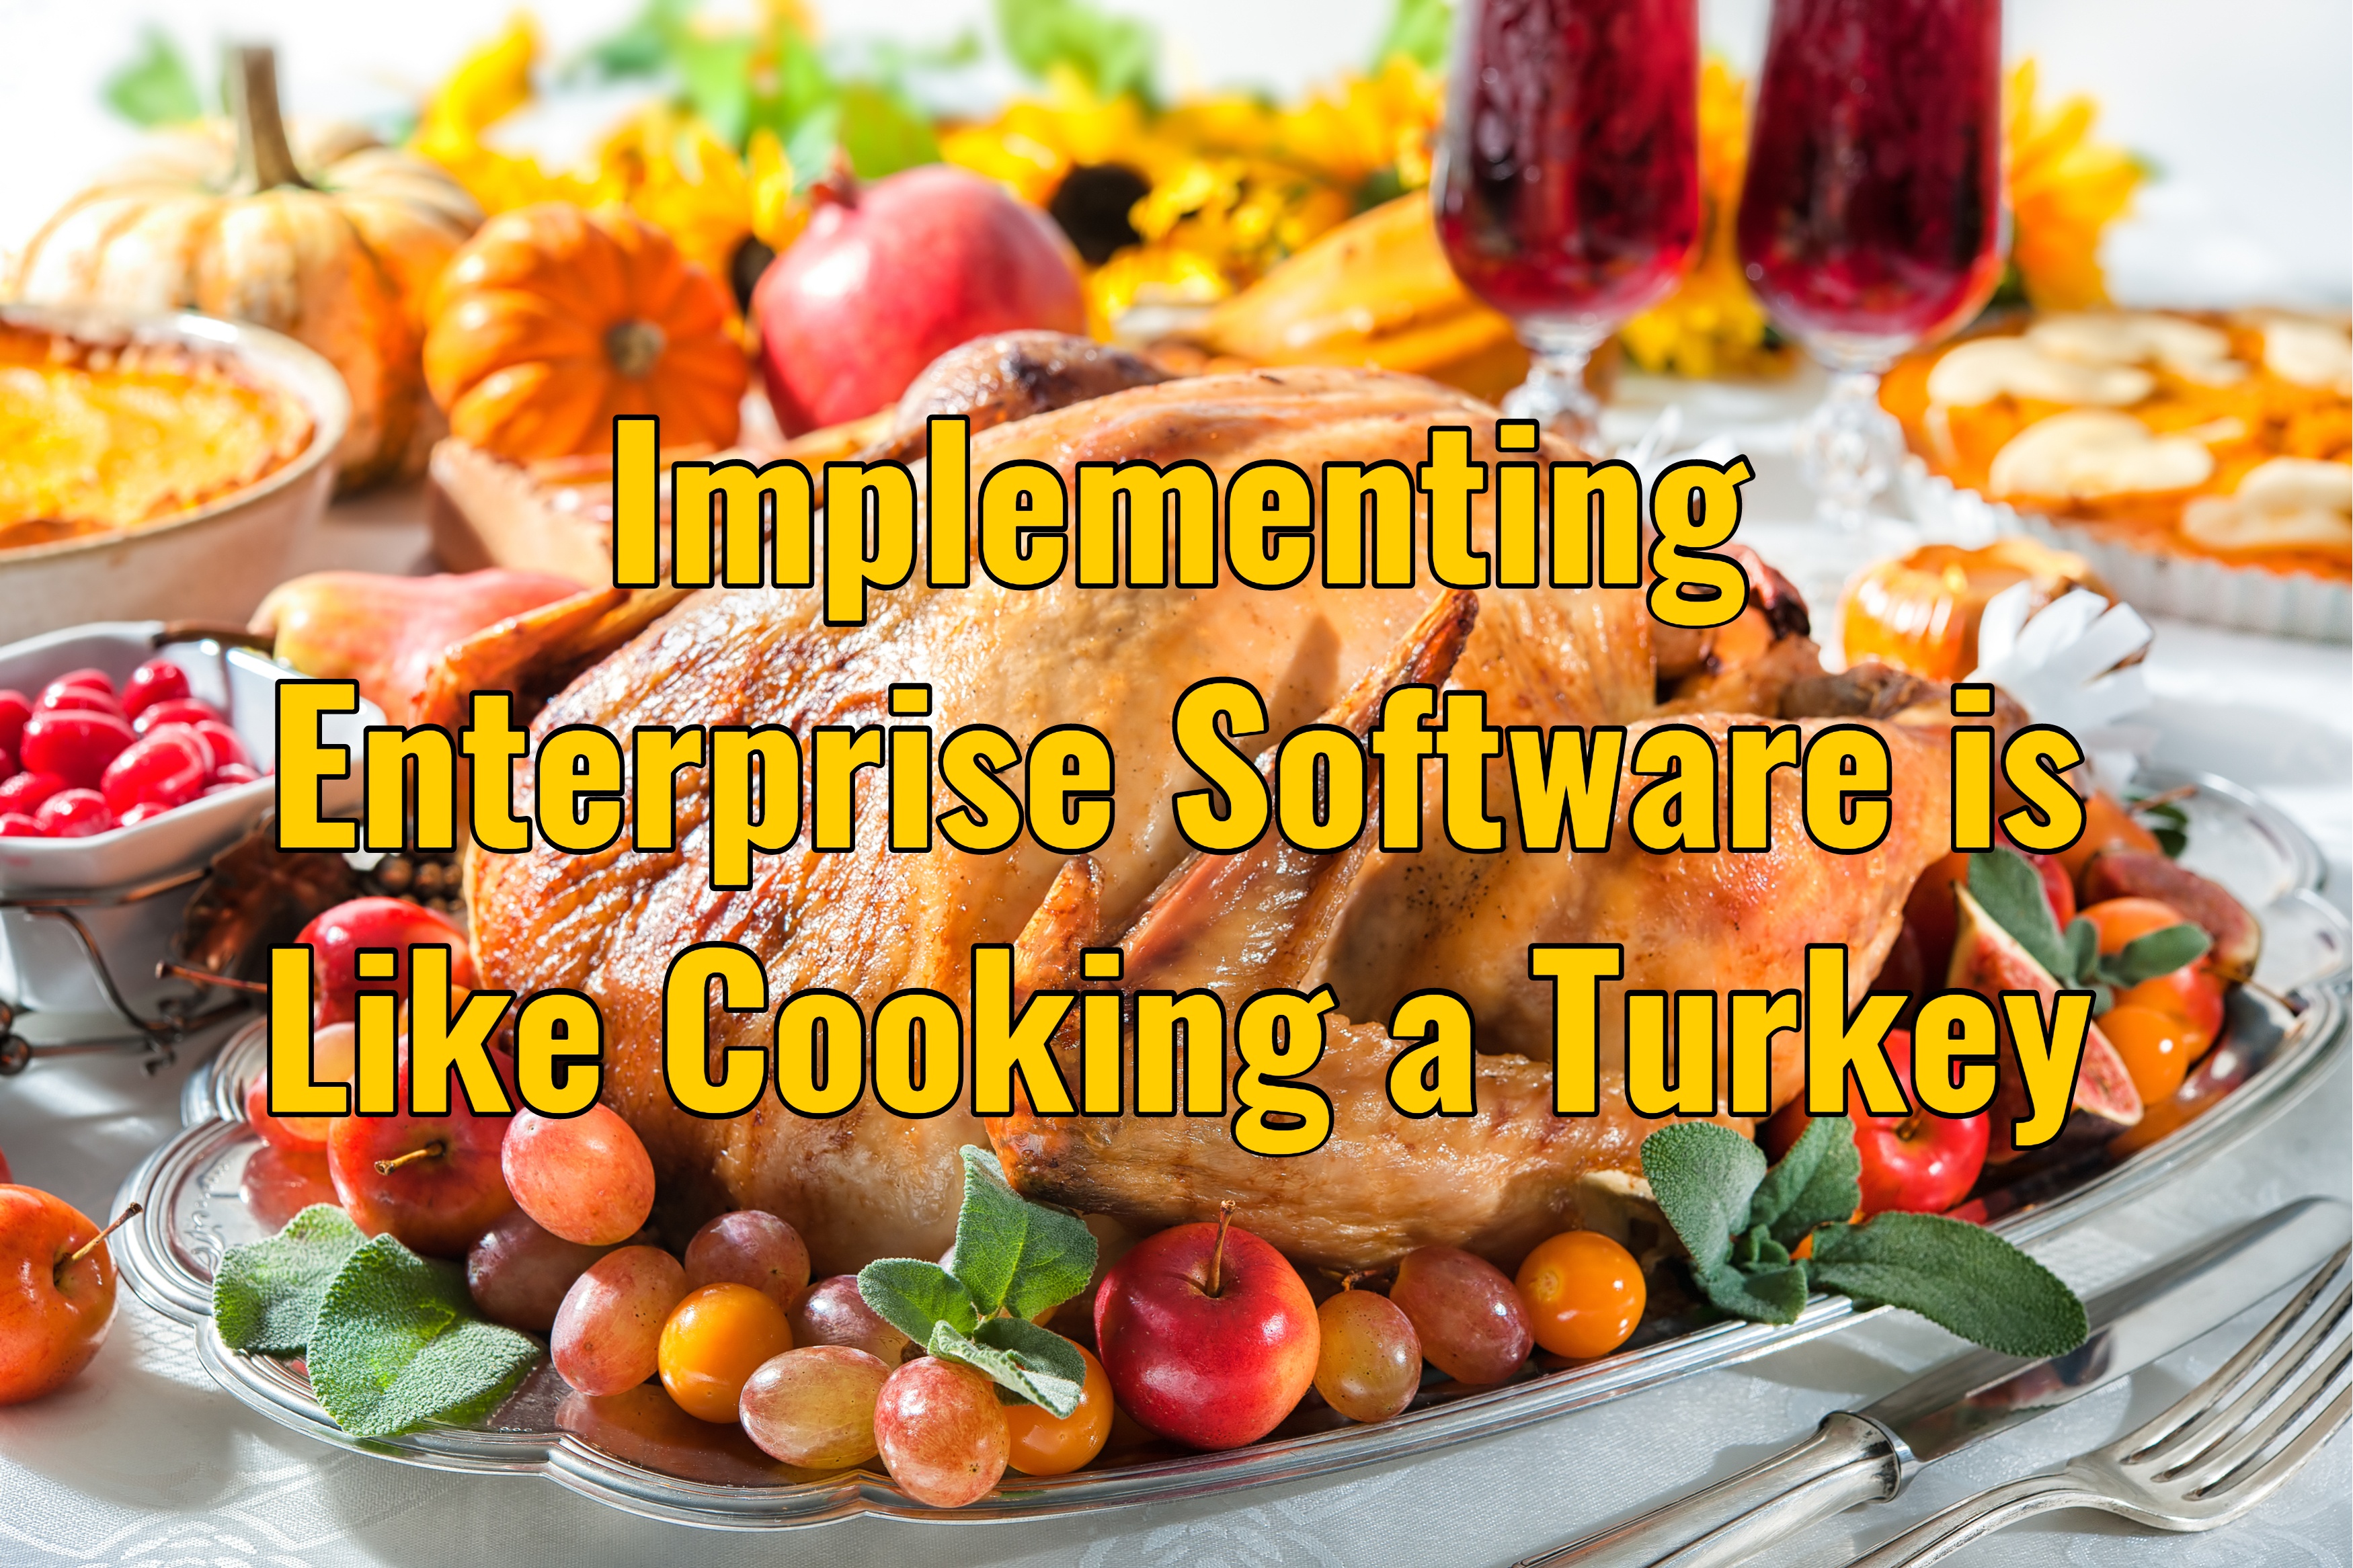 implement-enterprise-software-turkey.jpg